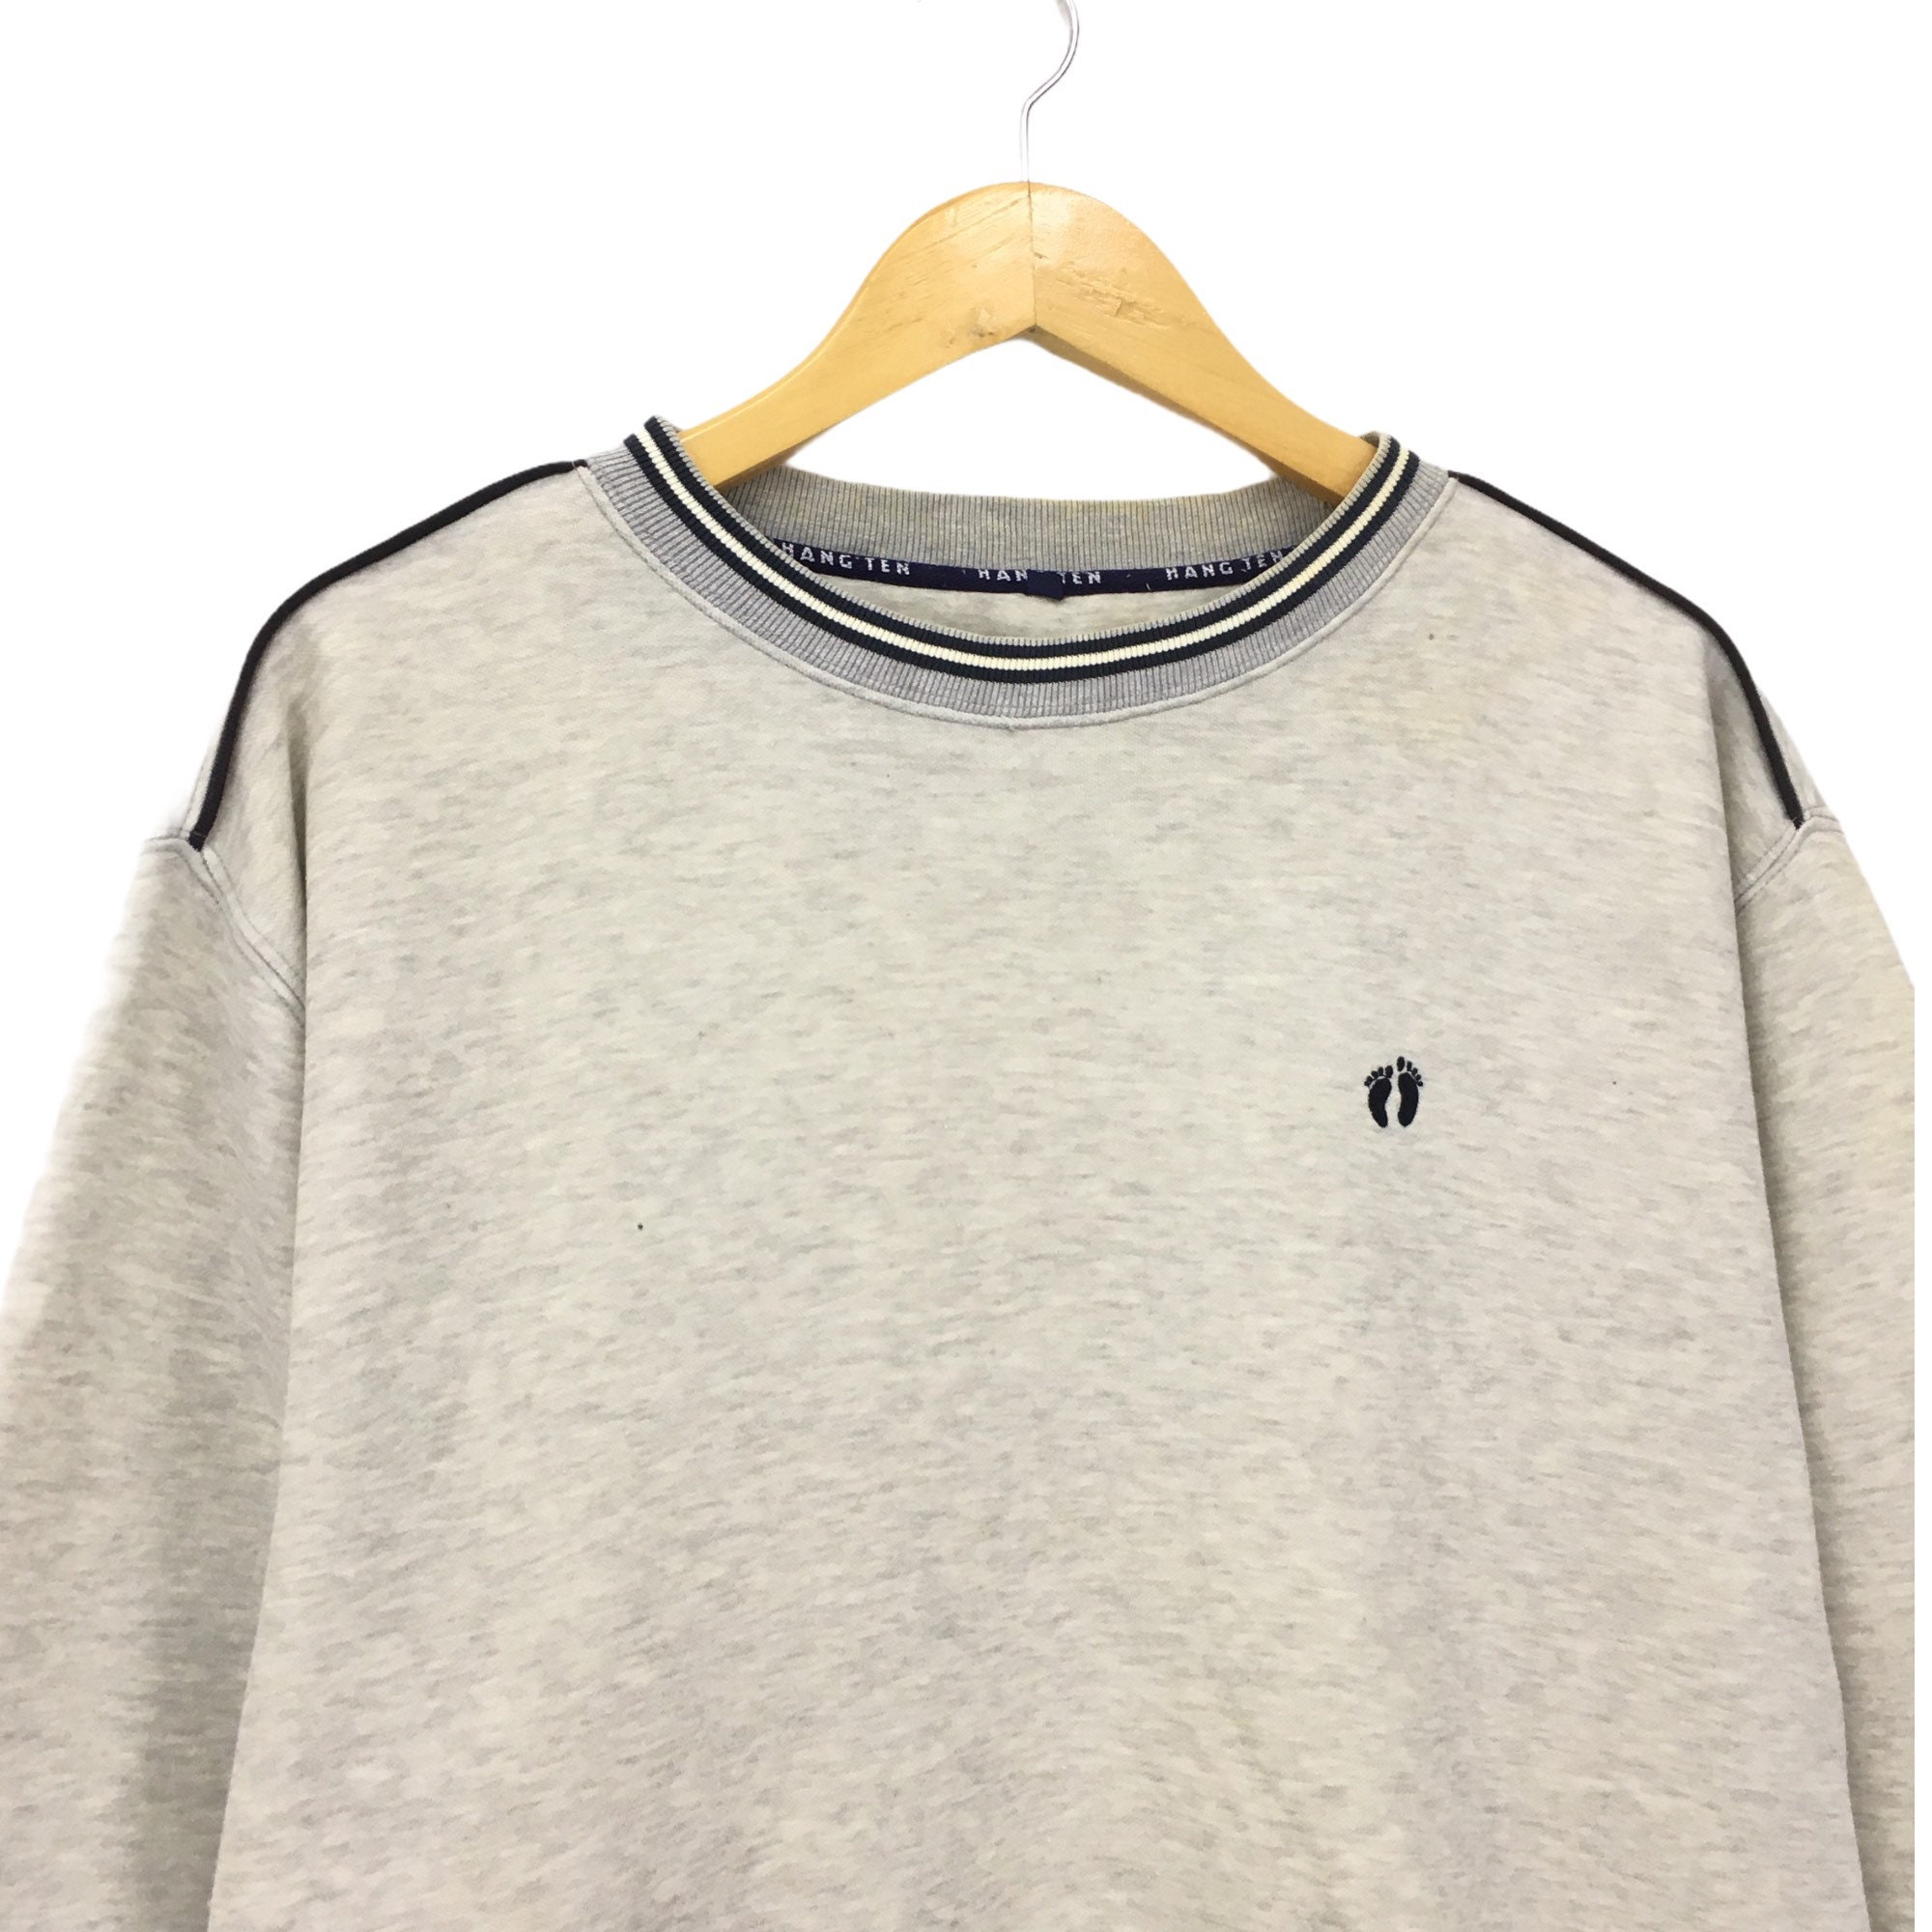 Vintage hang ten 90's sweatshirt crewneck jumper very big logo embroidery size large very rare item!!! Pick!